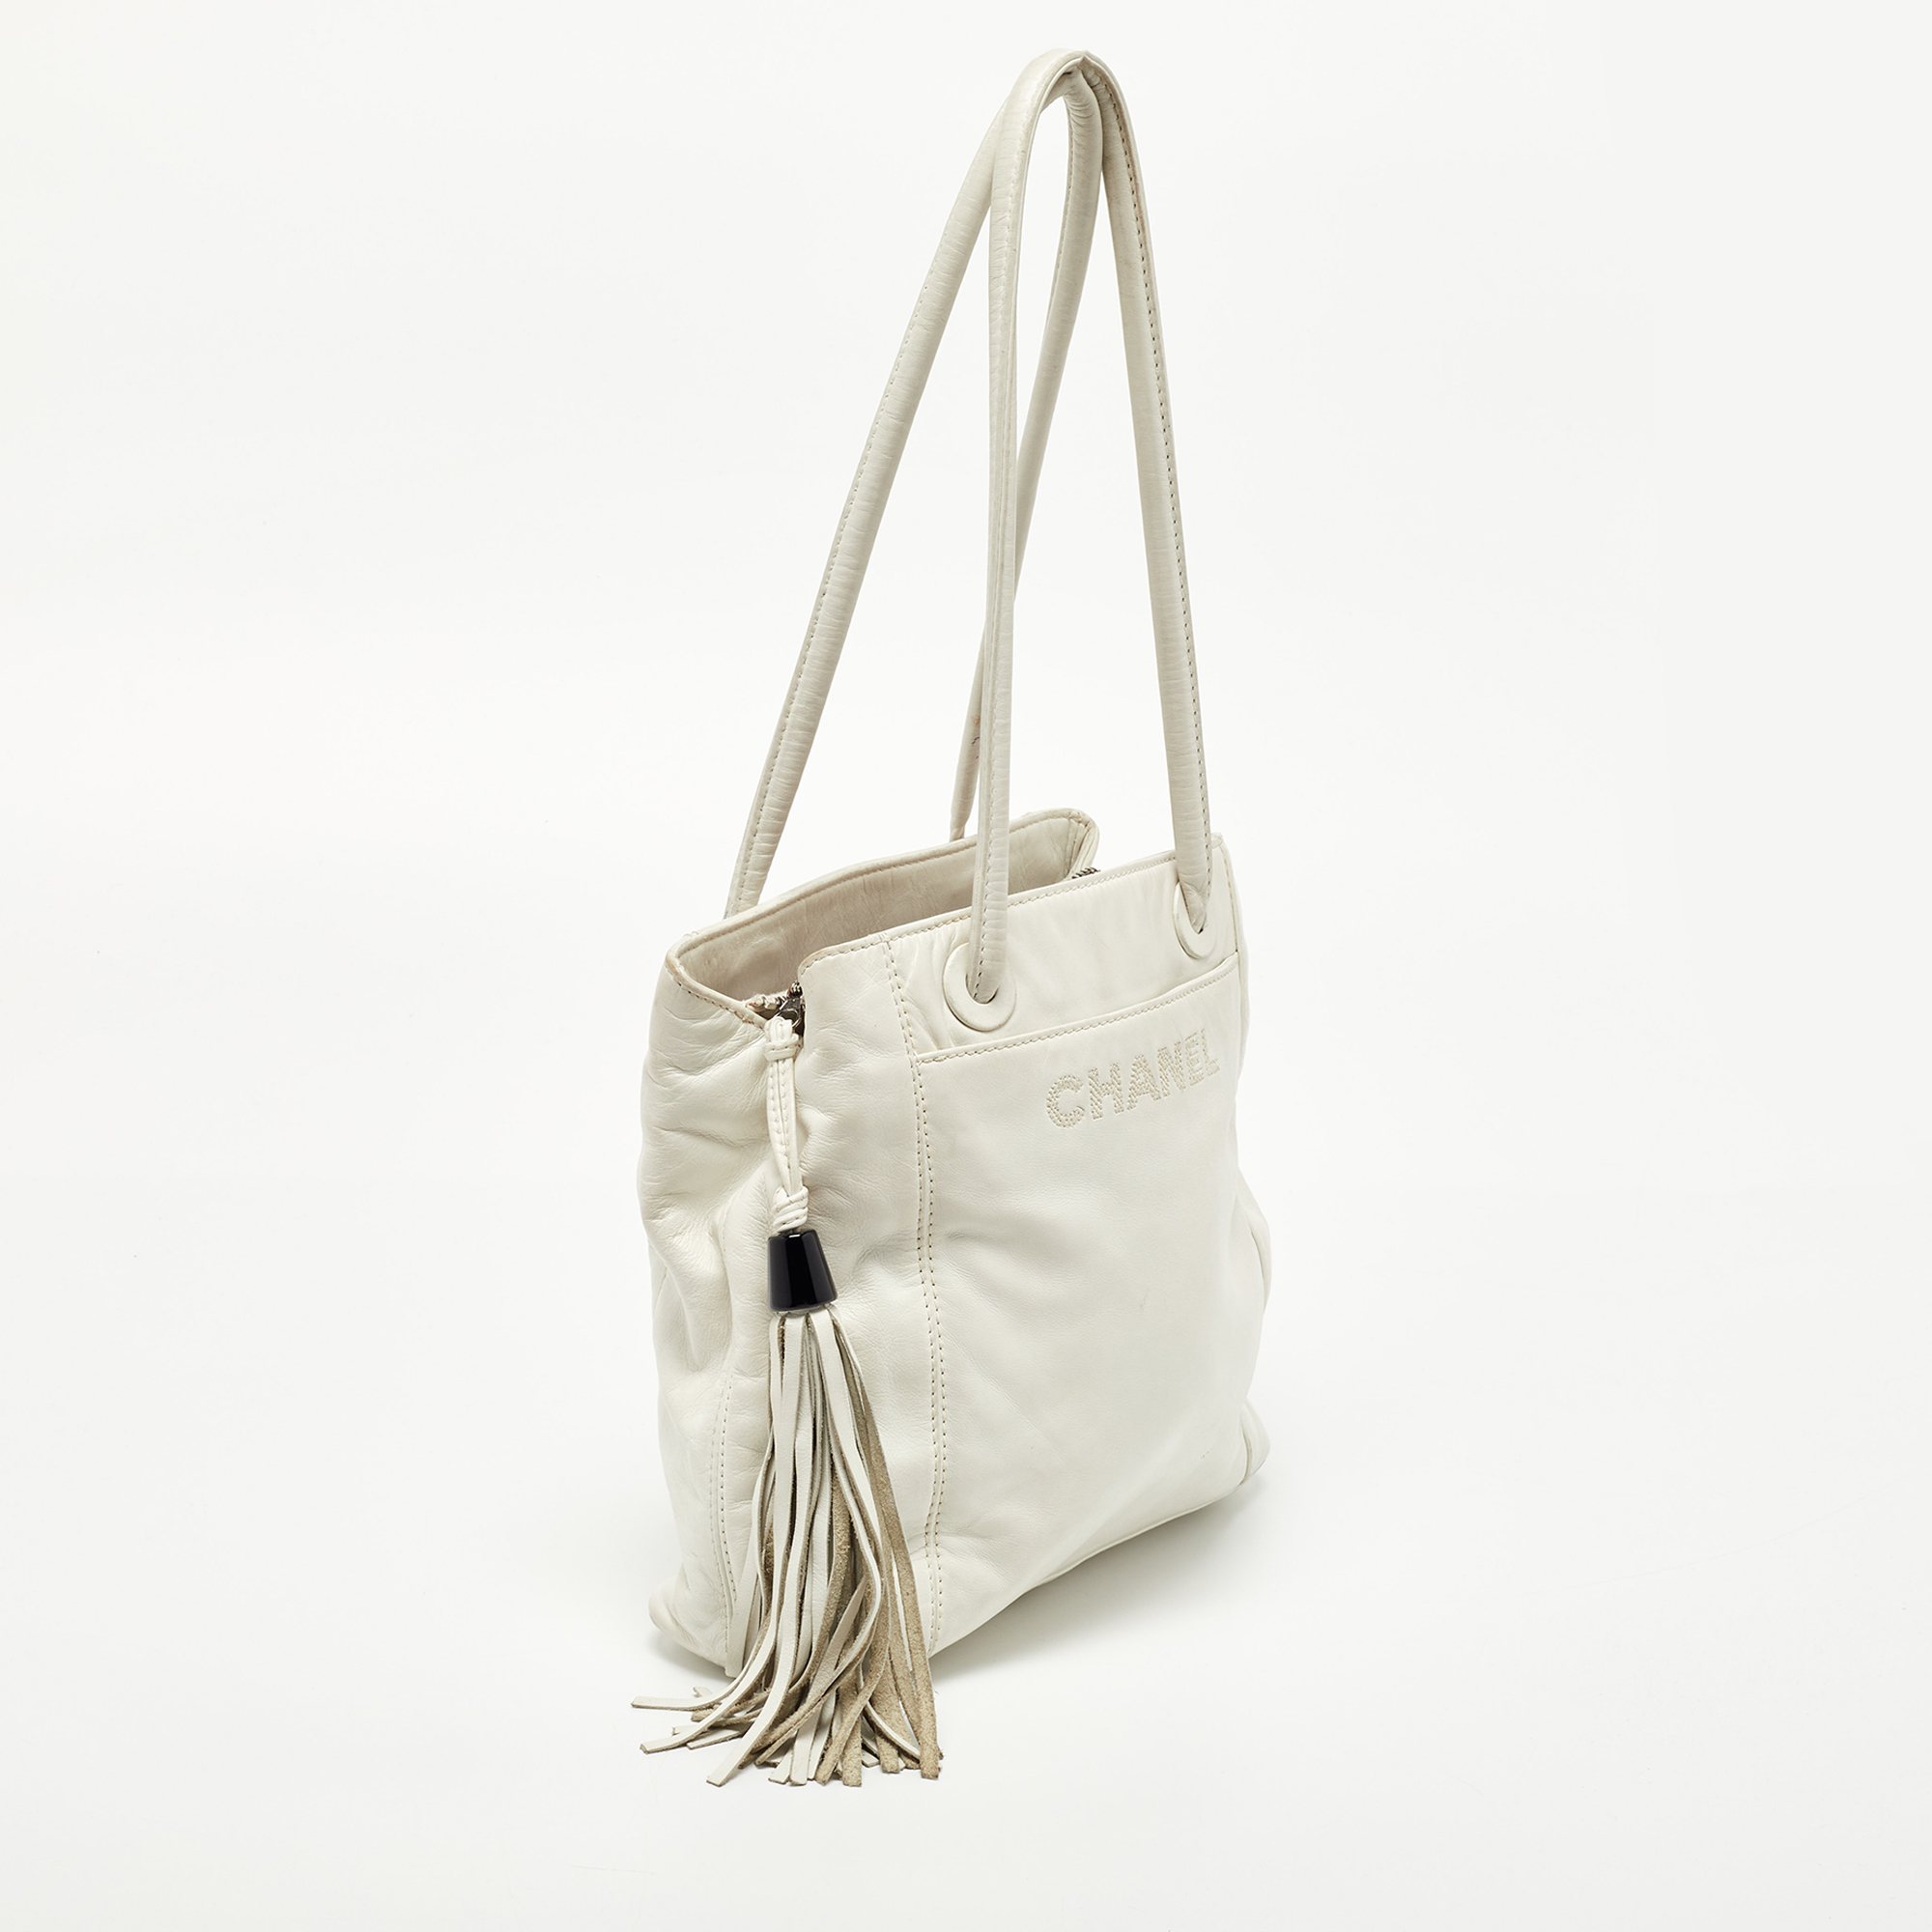 Chanel White Leather Vintage CC Tassel Bag